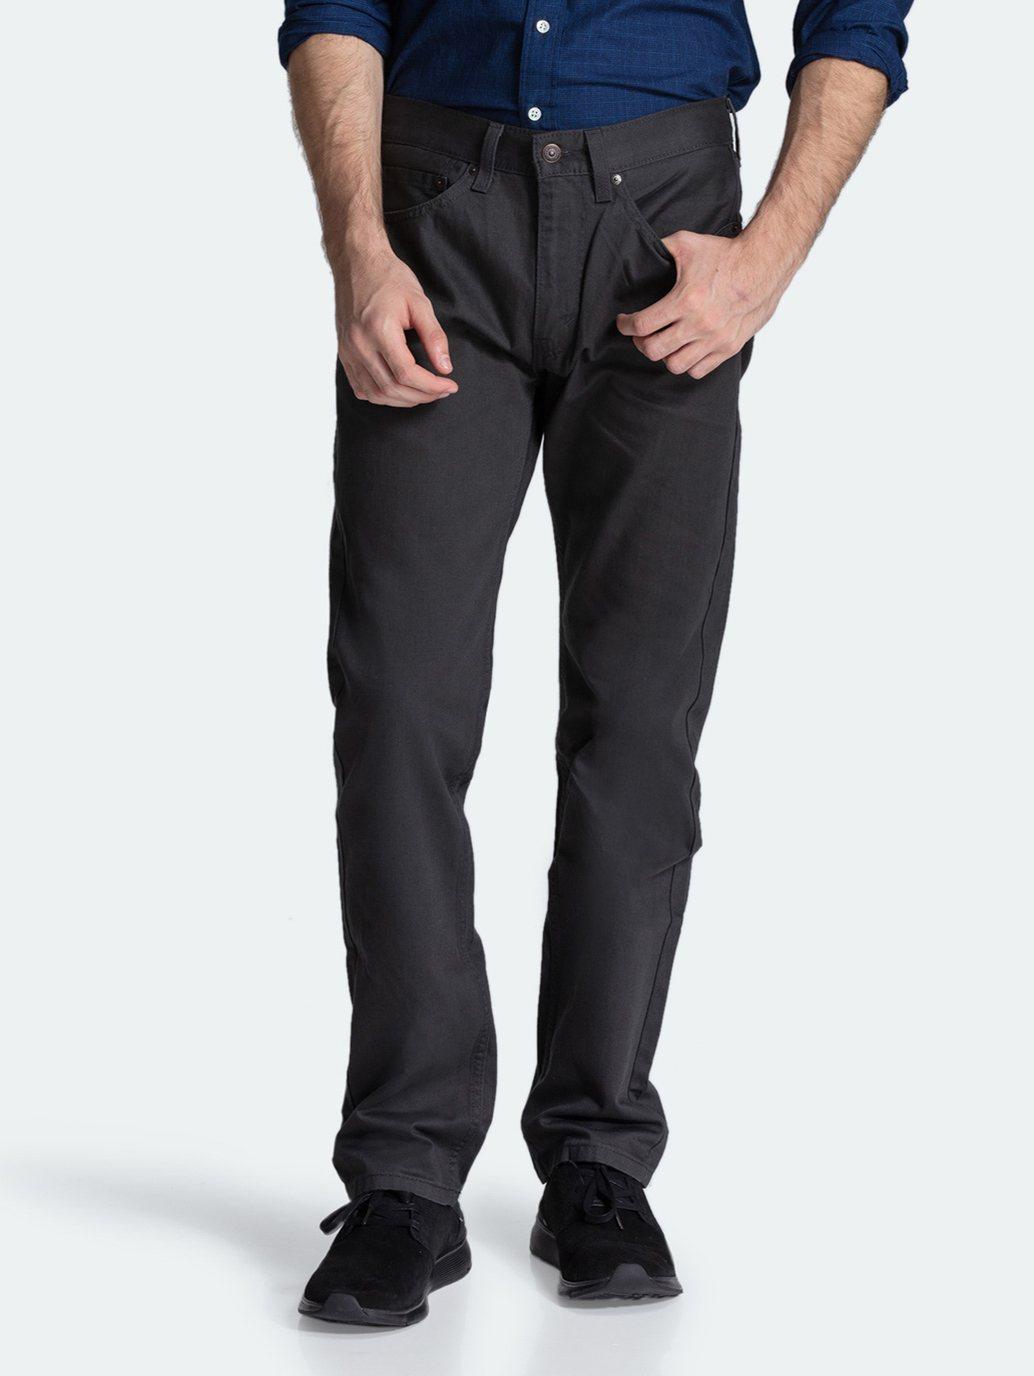 Buy Levi's® Men's 505™ Regular Fit Jeans | Levi's® Official Online Store SG